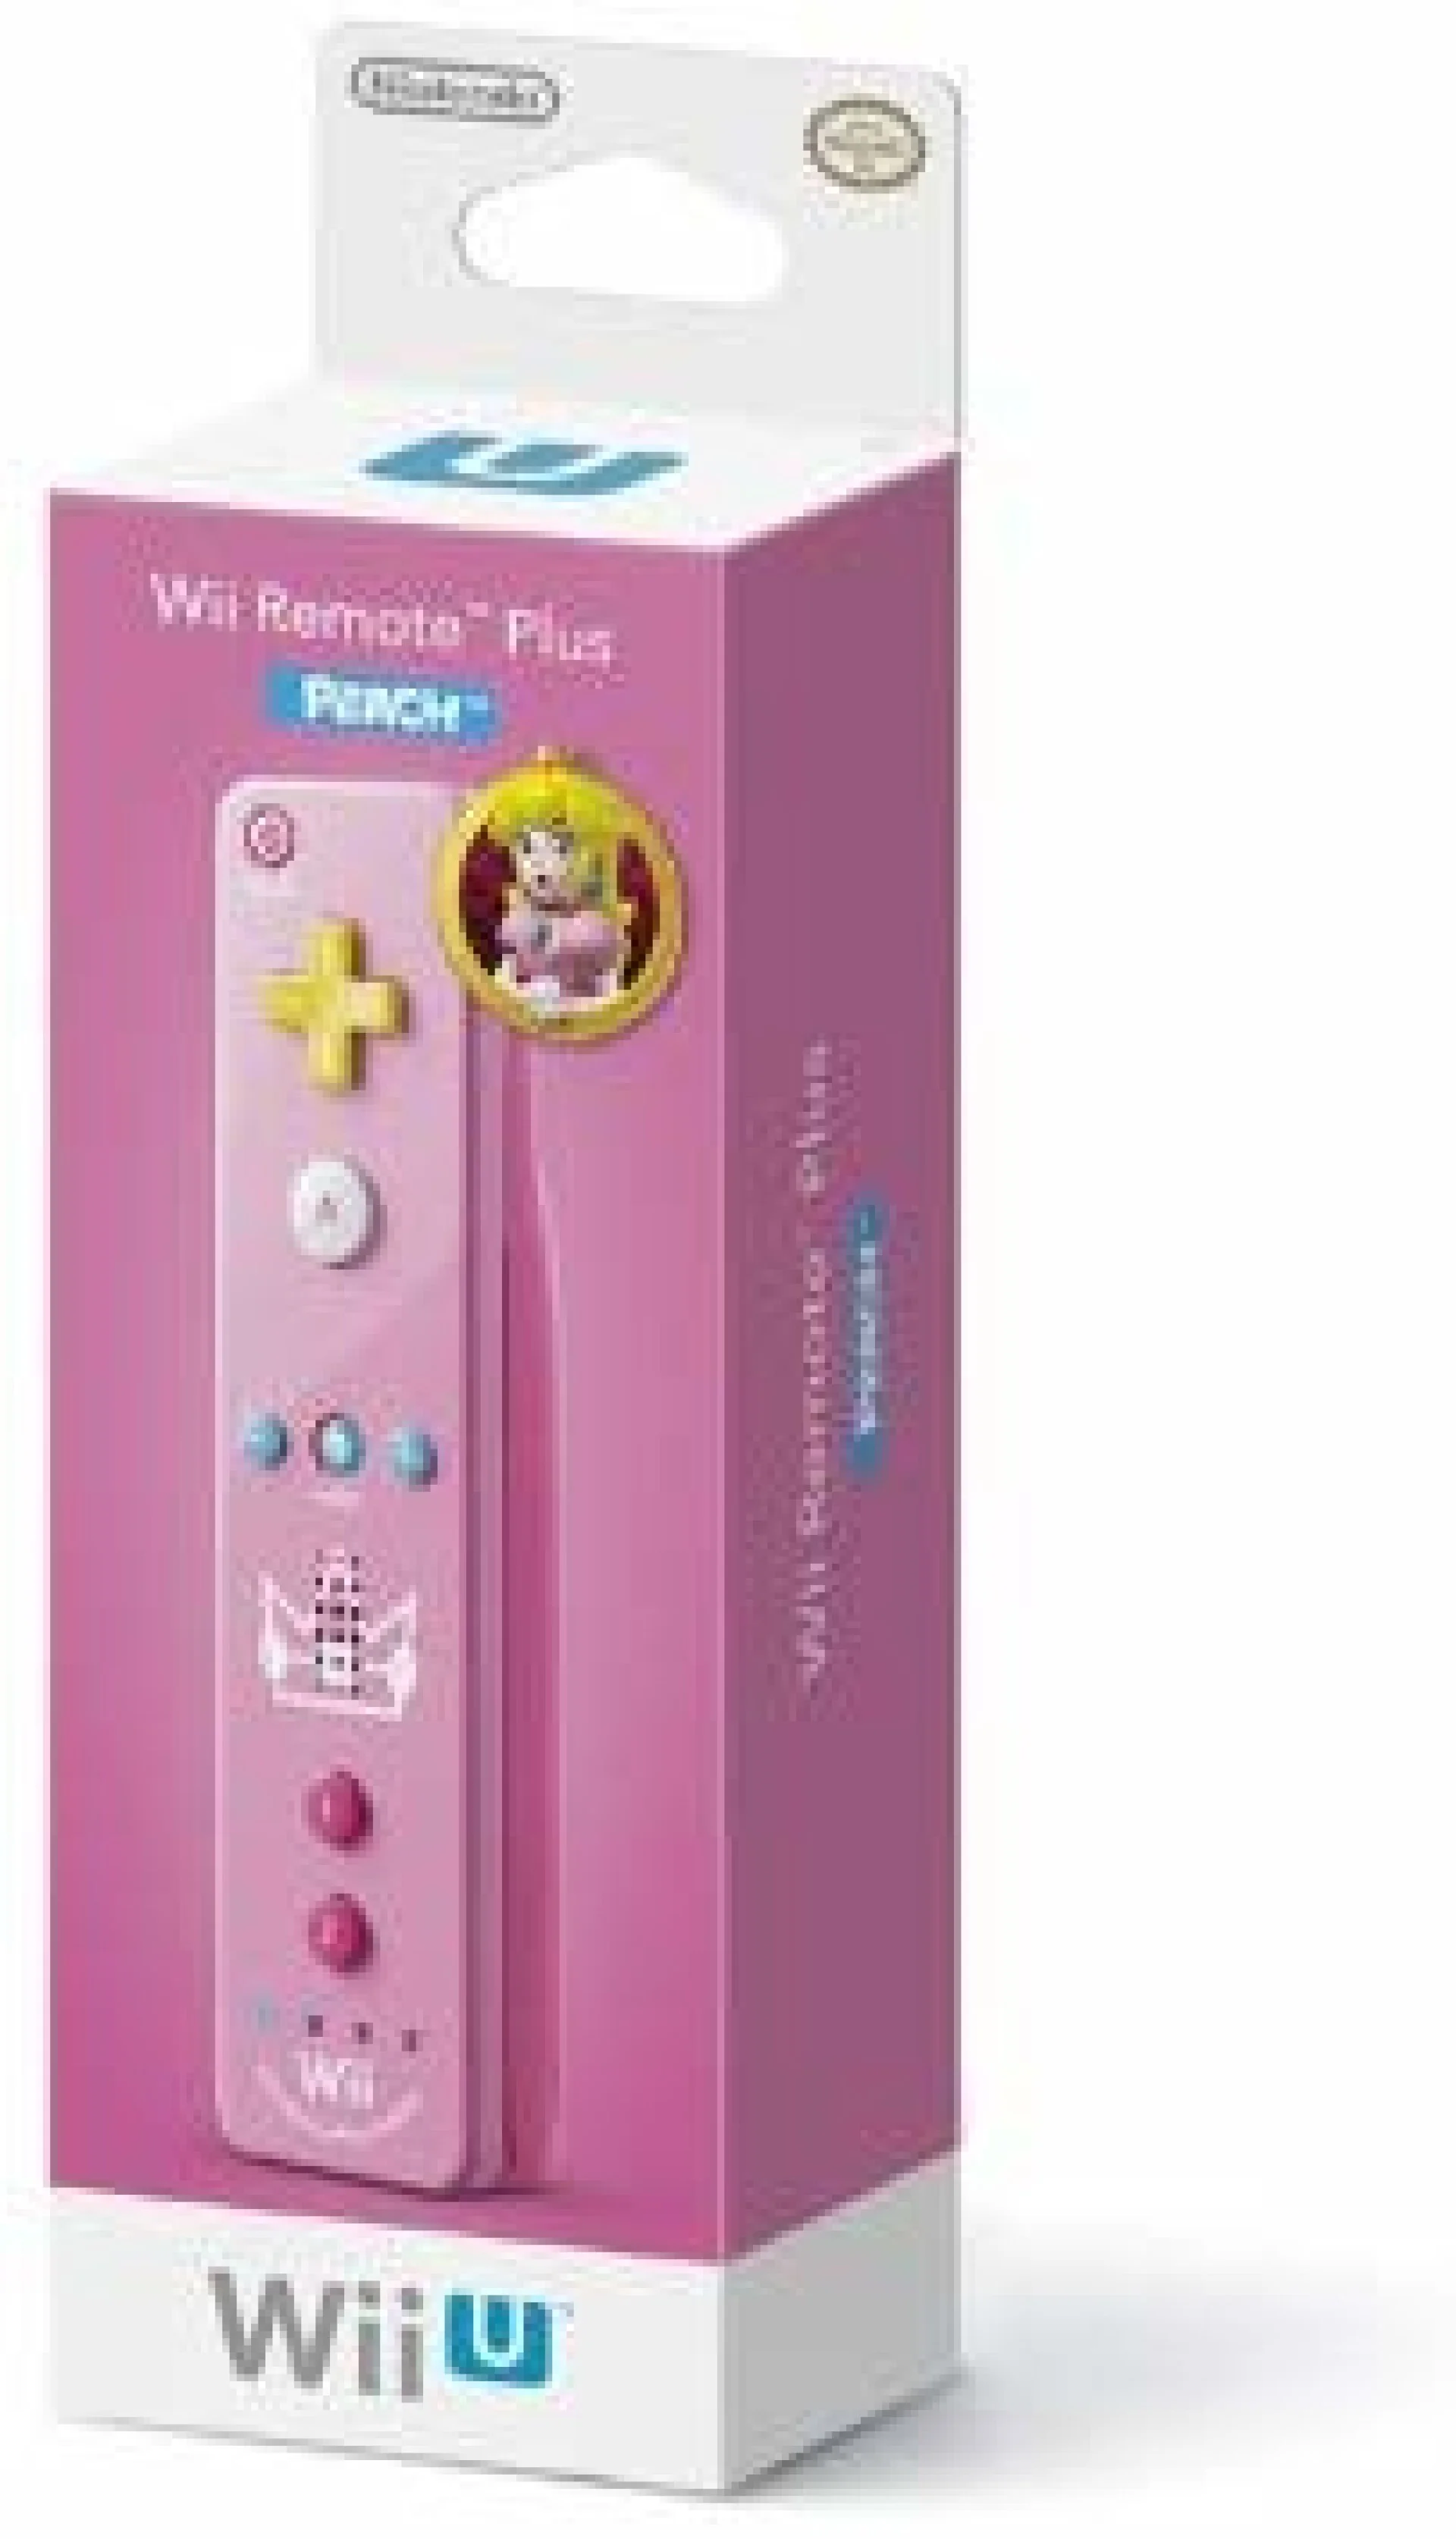  Nintendo Wii Peach Wiimote [EU]